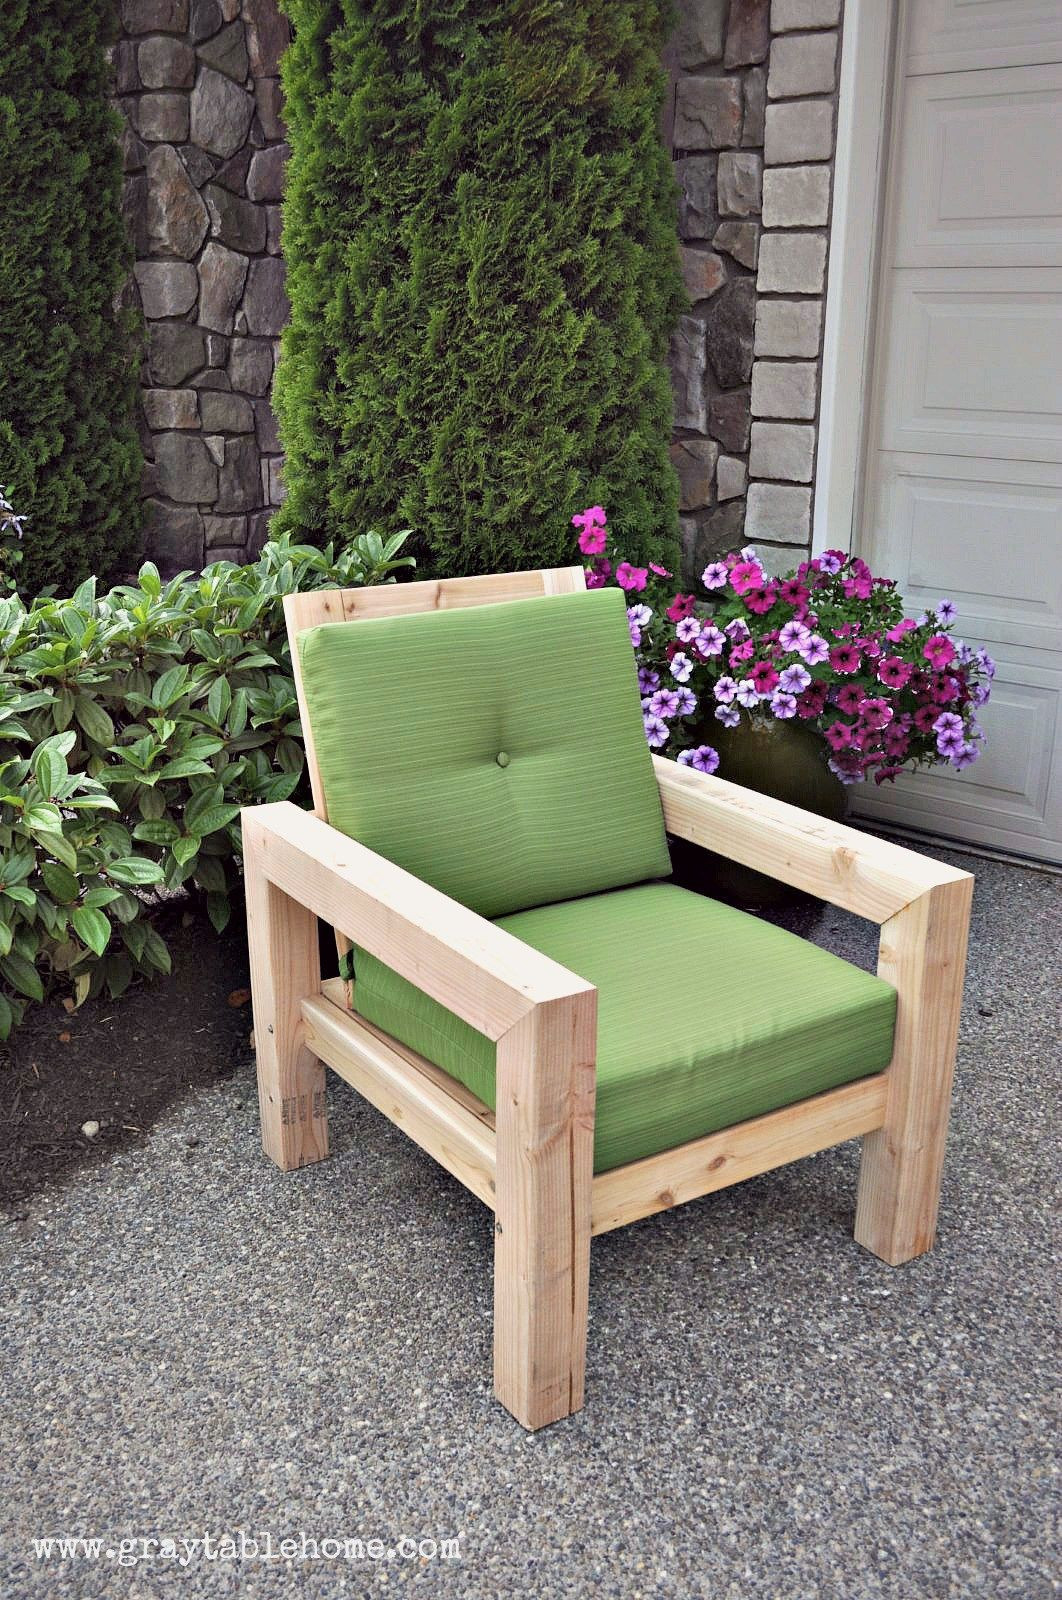 DIY Outdoor Furniture Plans
 DIY Modern Rustic Outdoor Chair plans using outdoor